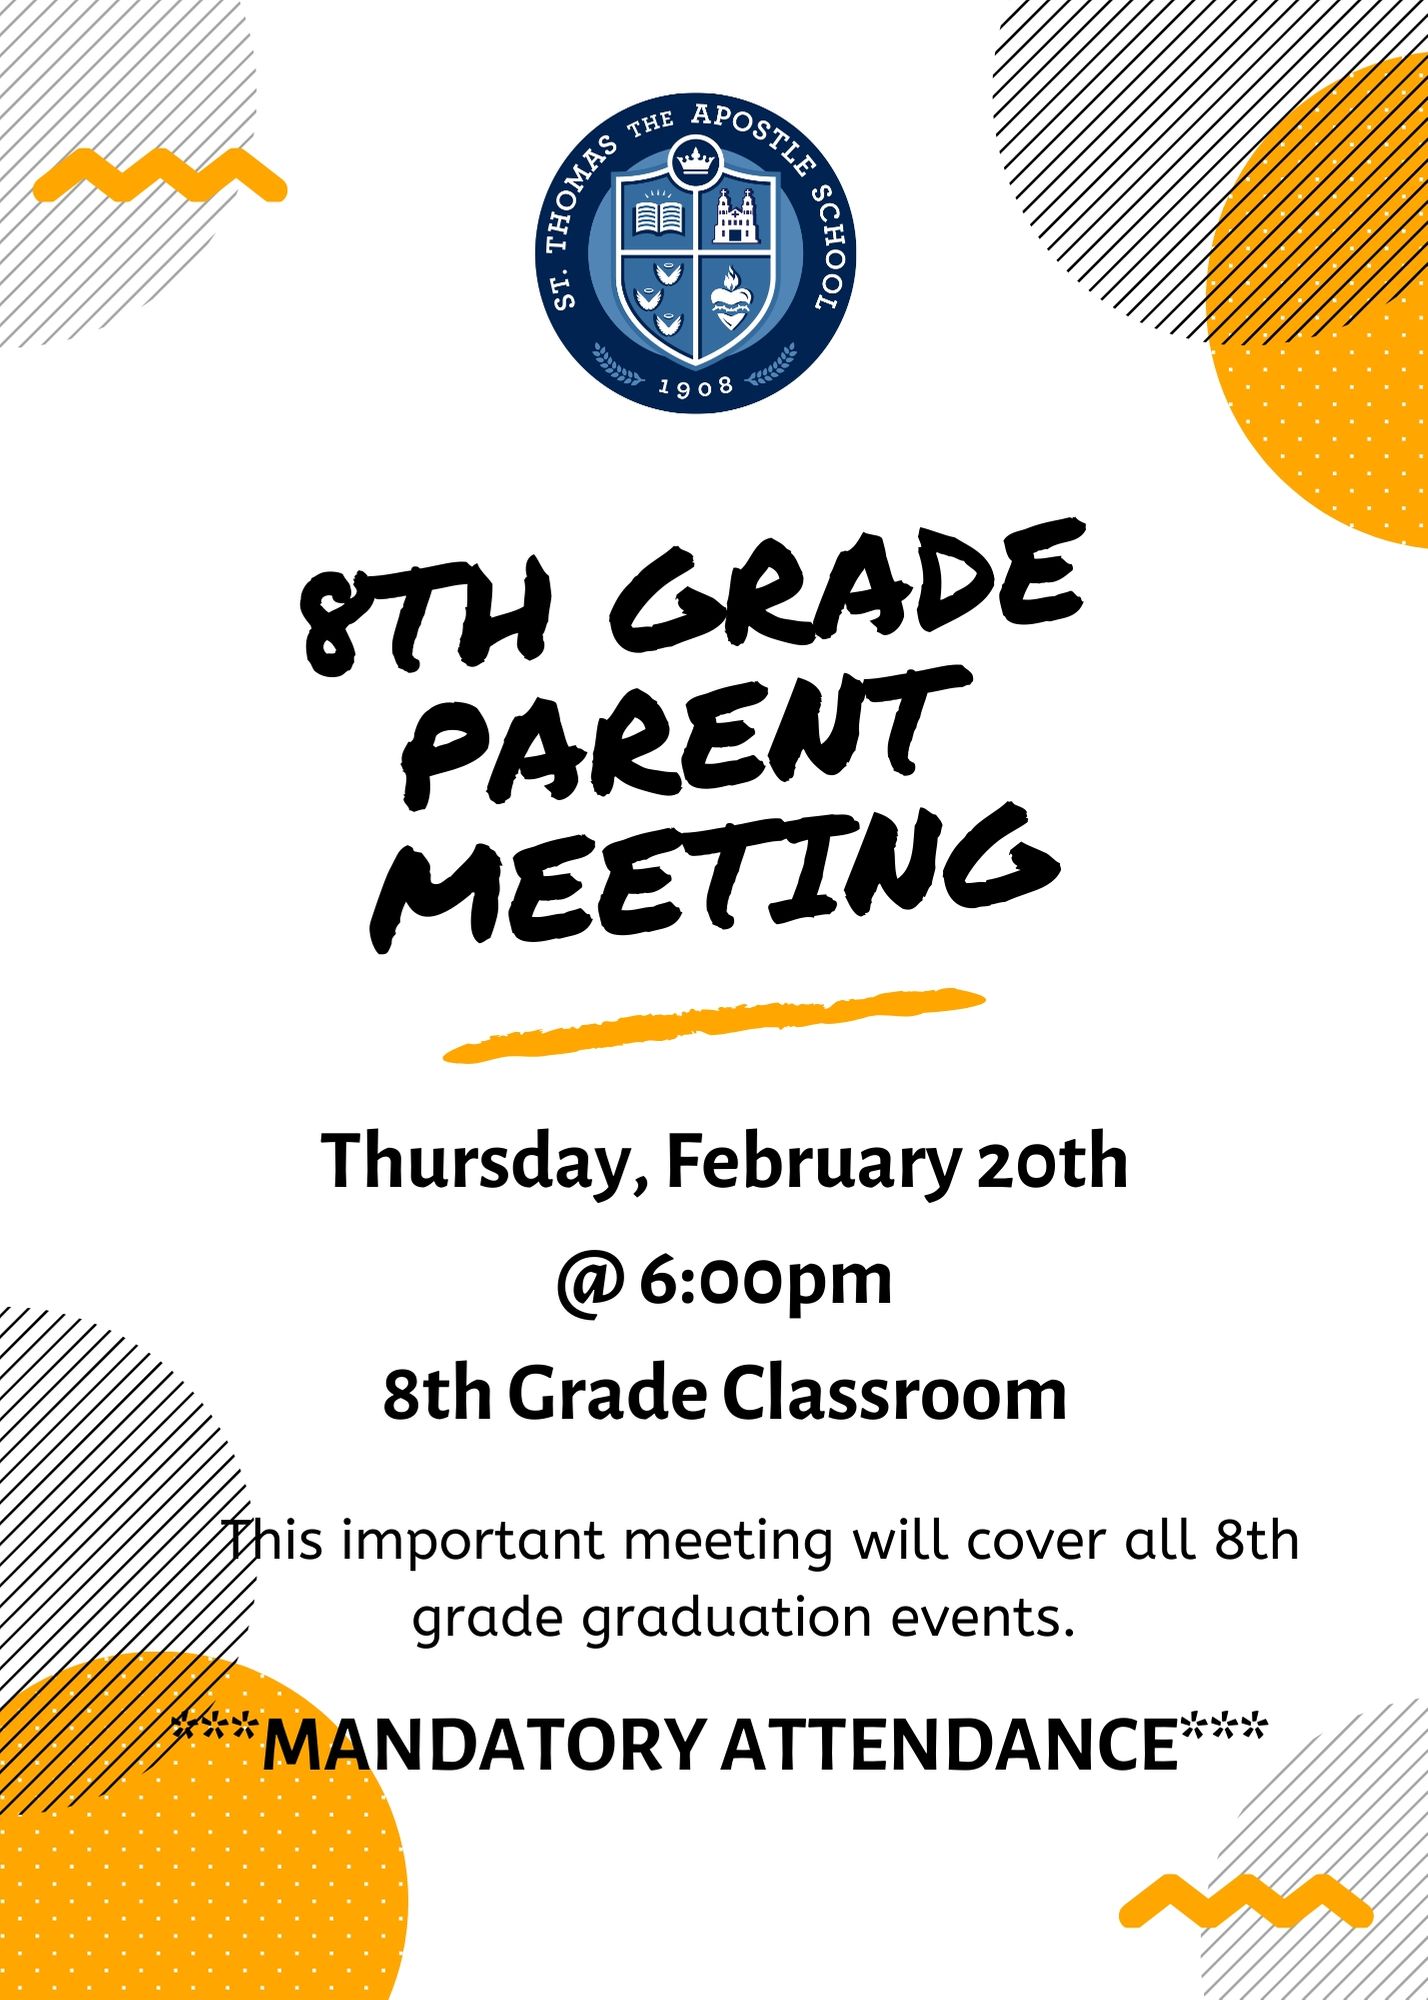 8th Grade Parent Meeting - February 20th | St. Thomas the Apostle School